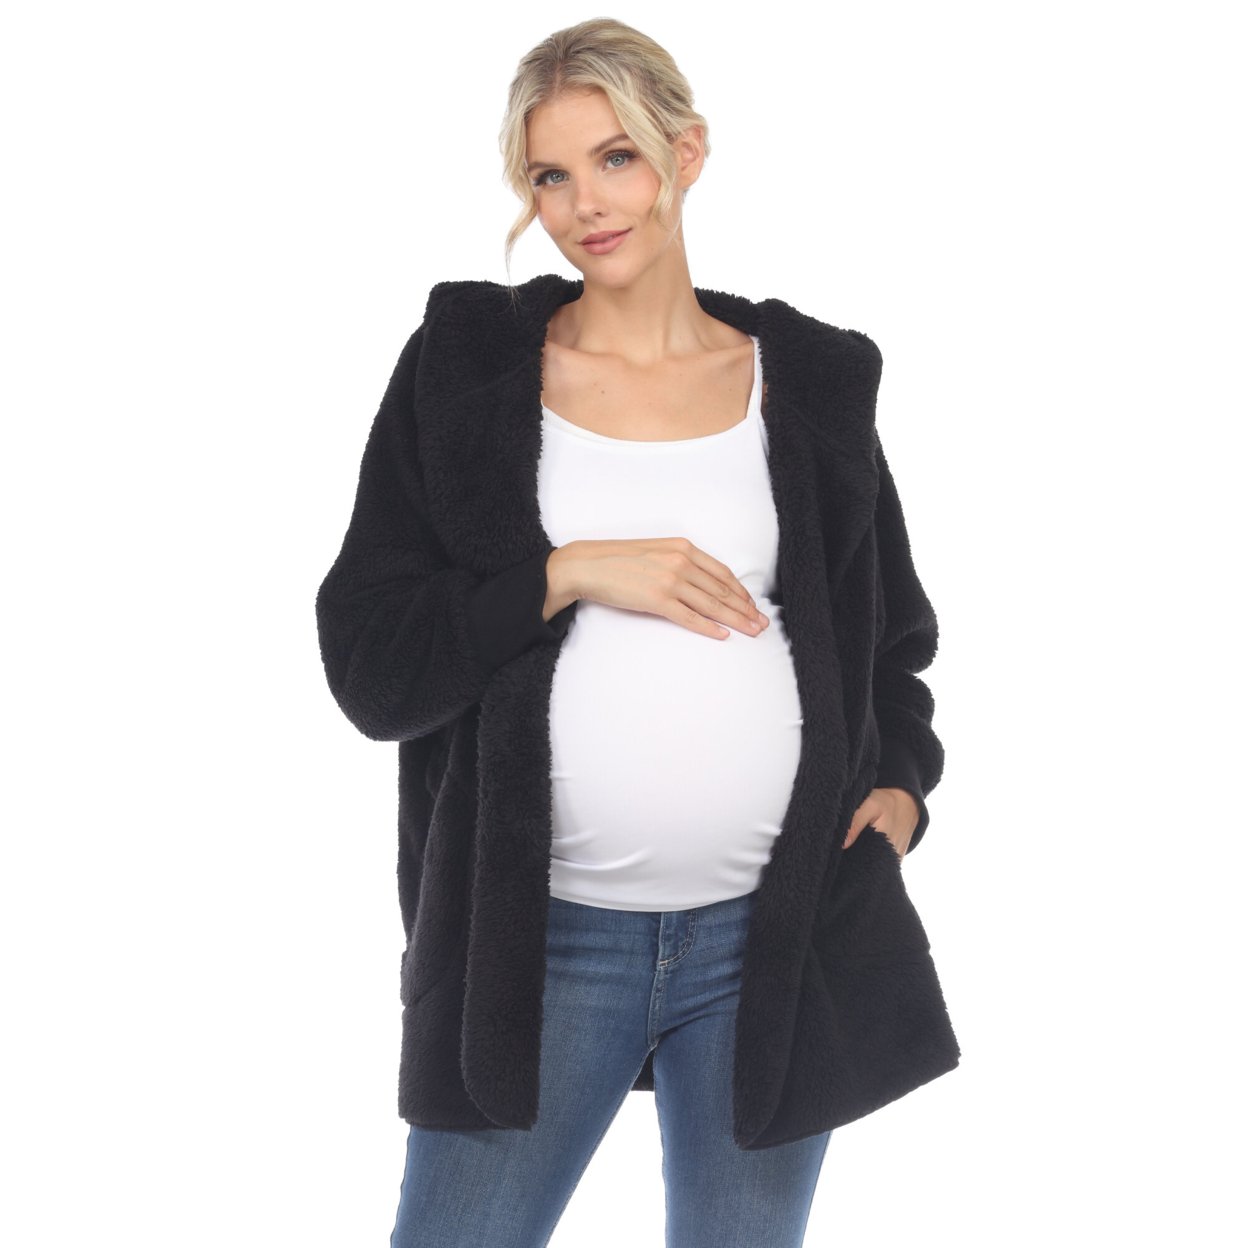 White Mark Womenâs Maternity Plush Hooded Cardigan With Pockets - Black, L/XL